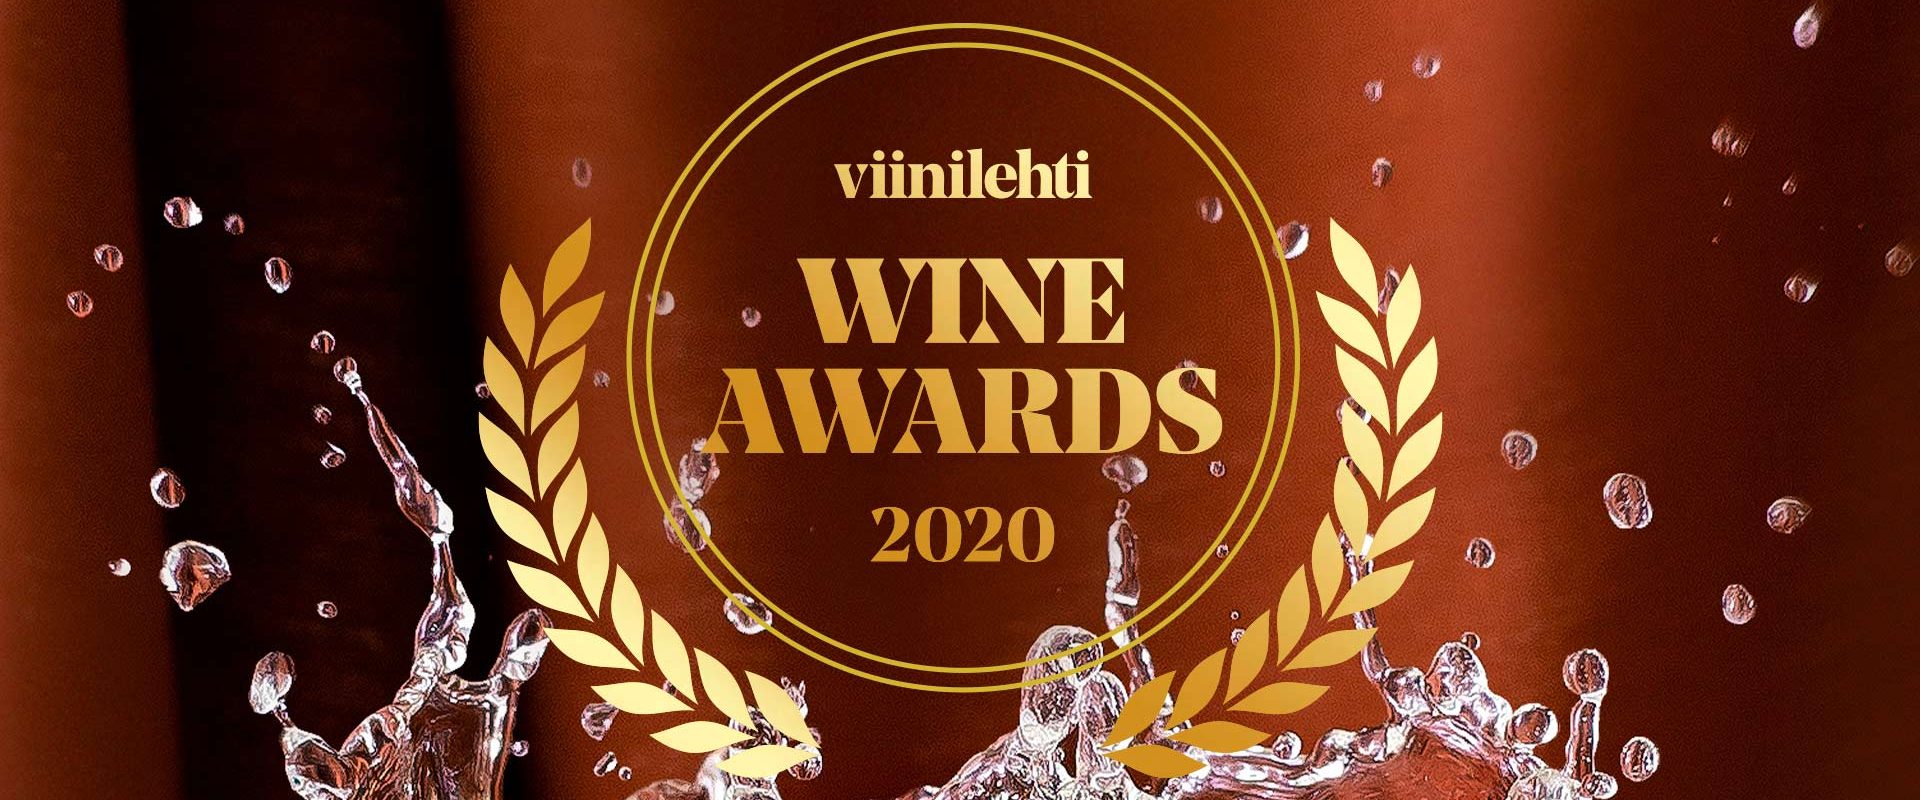 Viinilehti Wine Awards